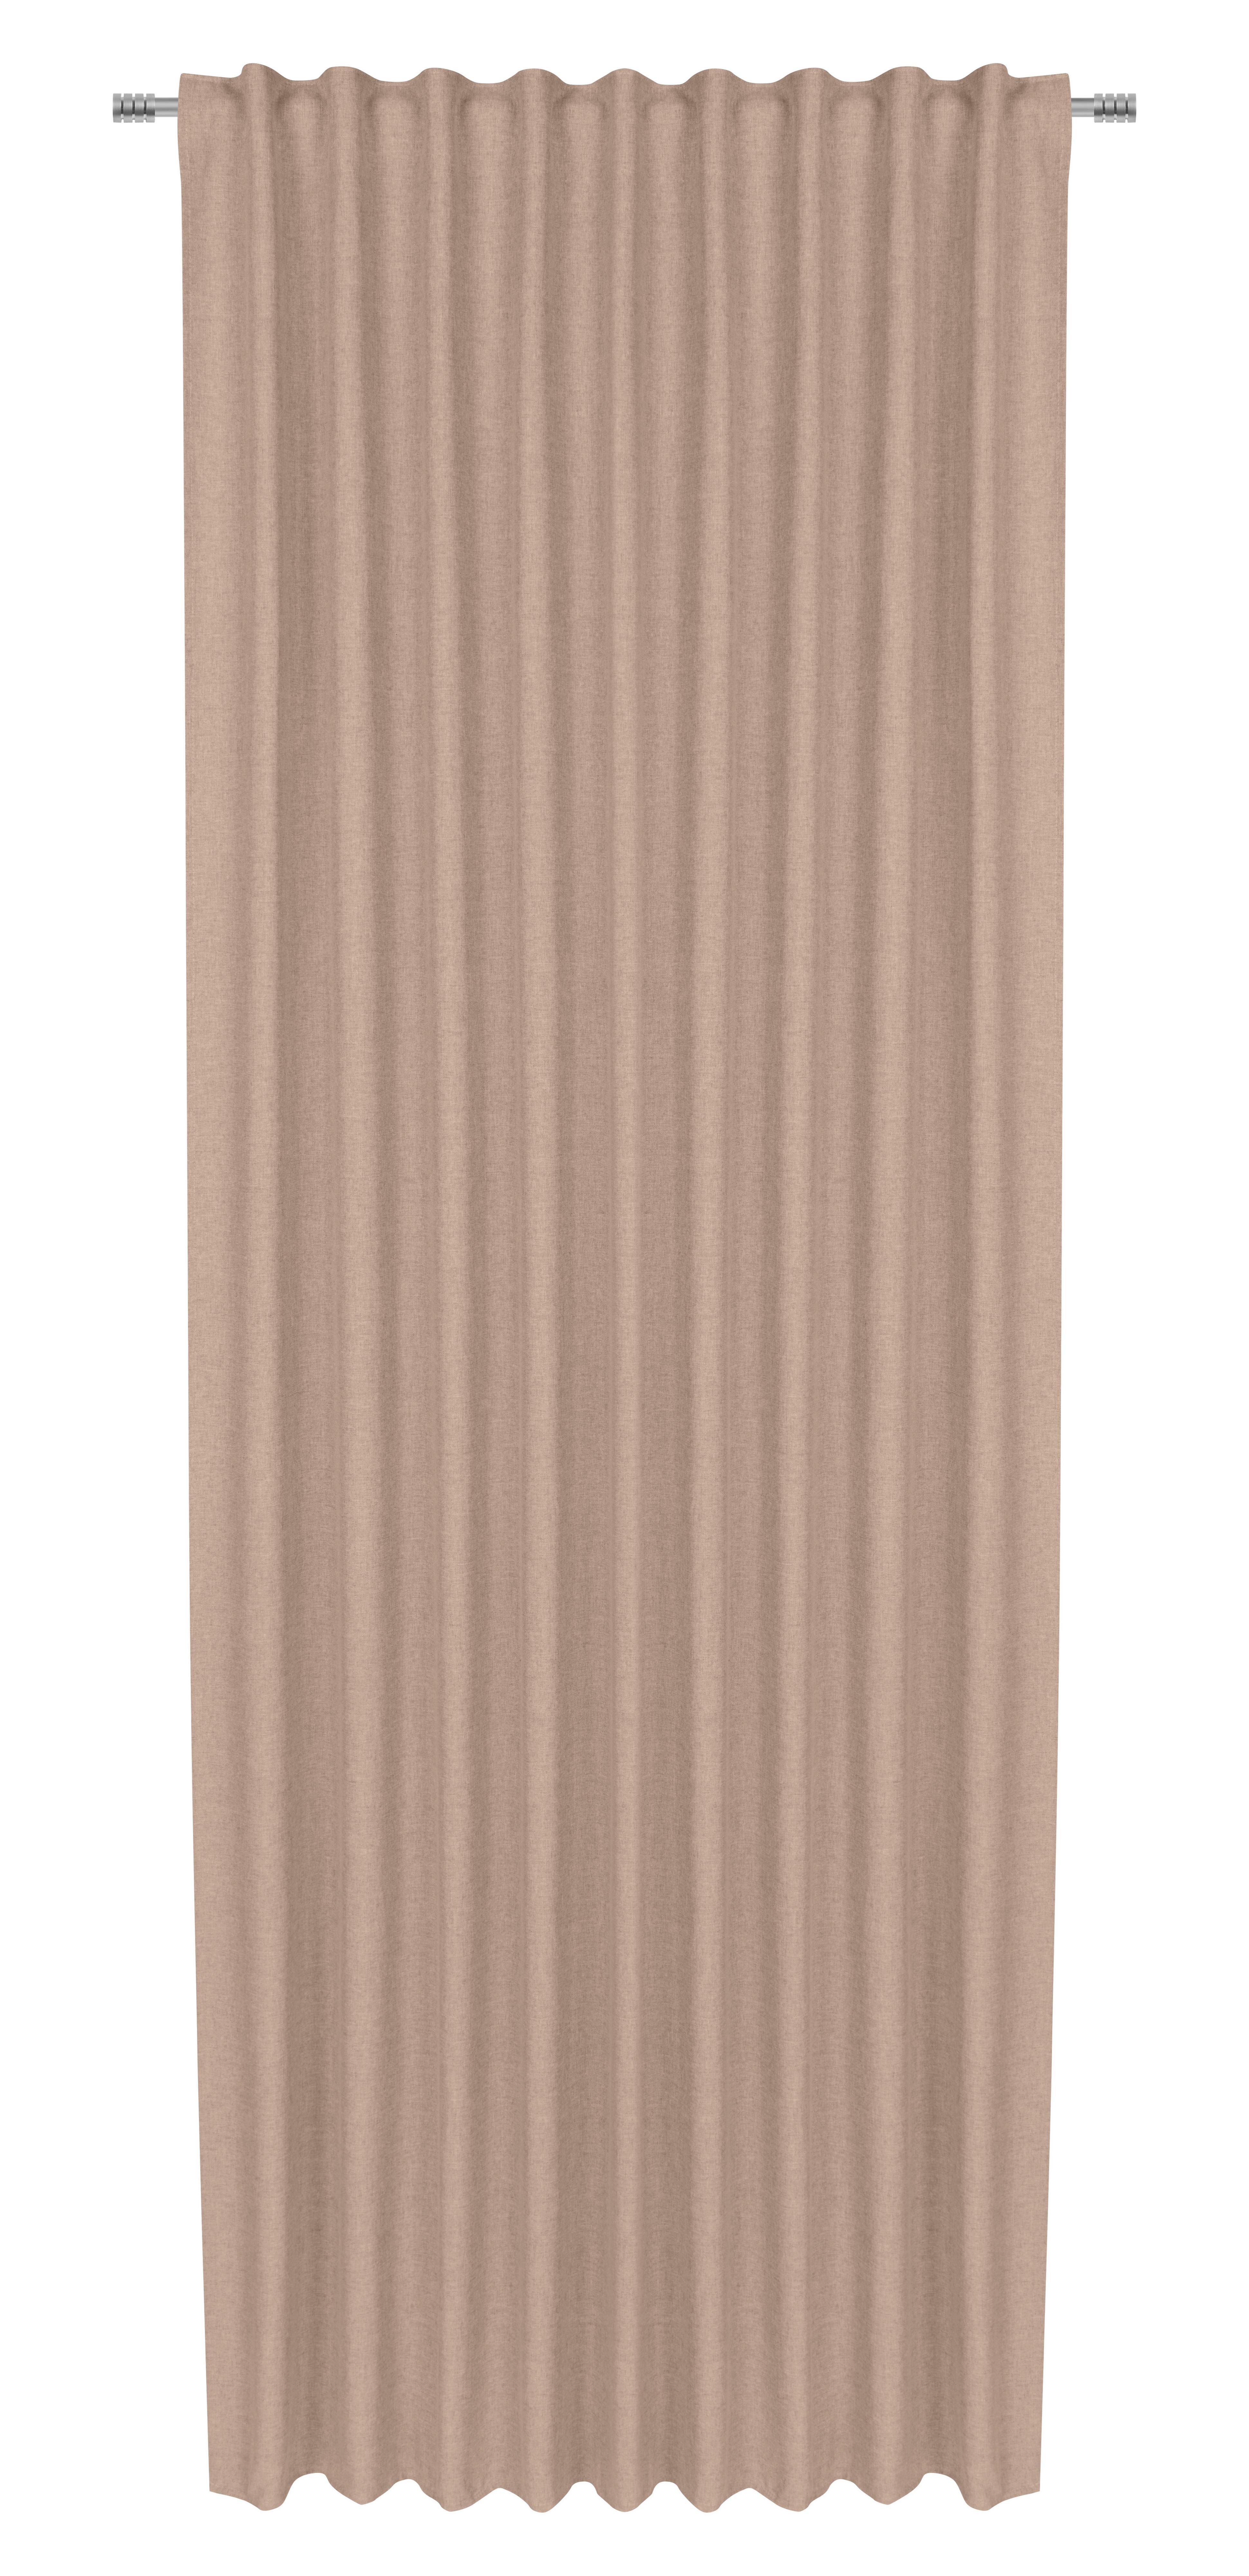 Gotova Zavjesa Ulrich - taupe, tekstil (135/245cm) - Modern Living